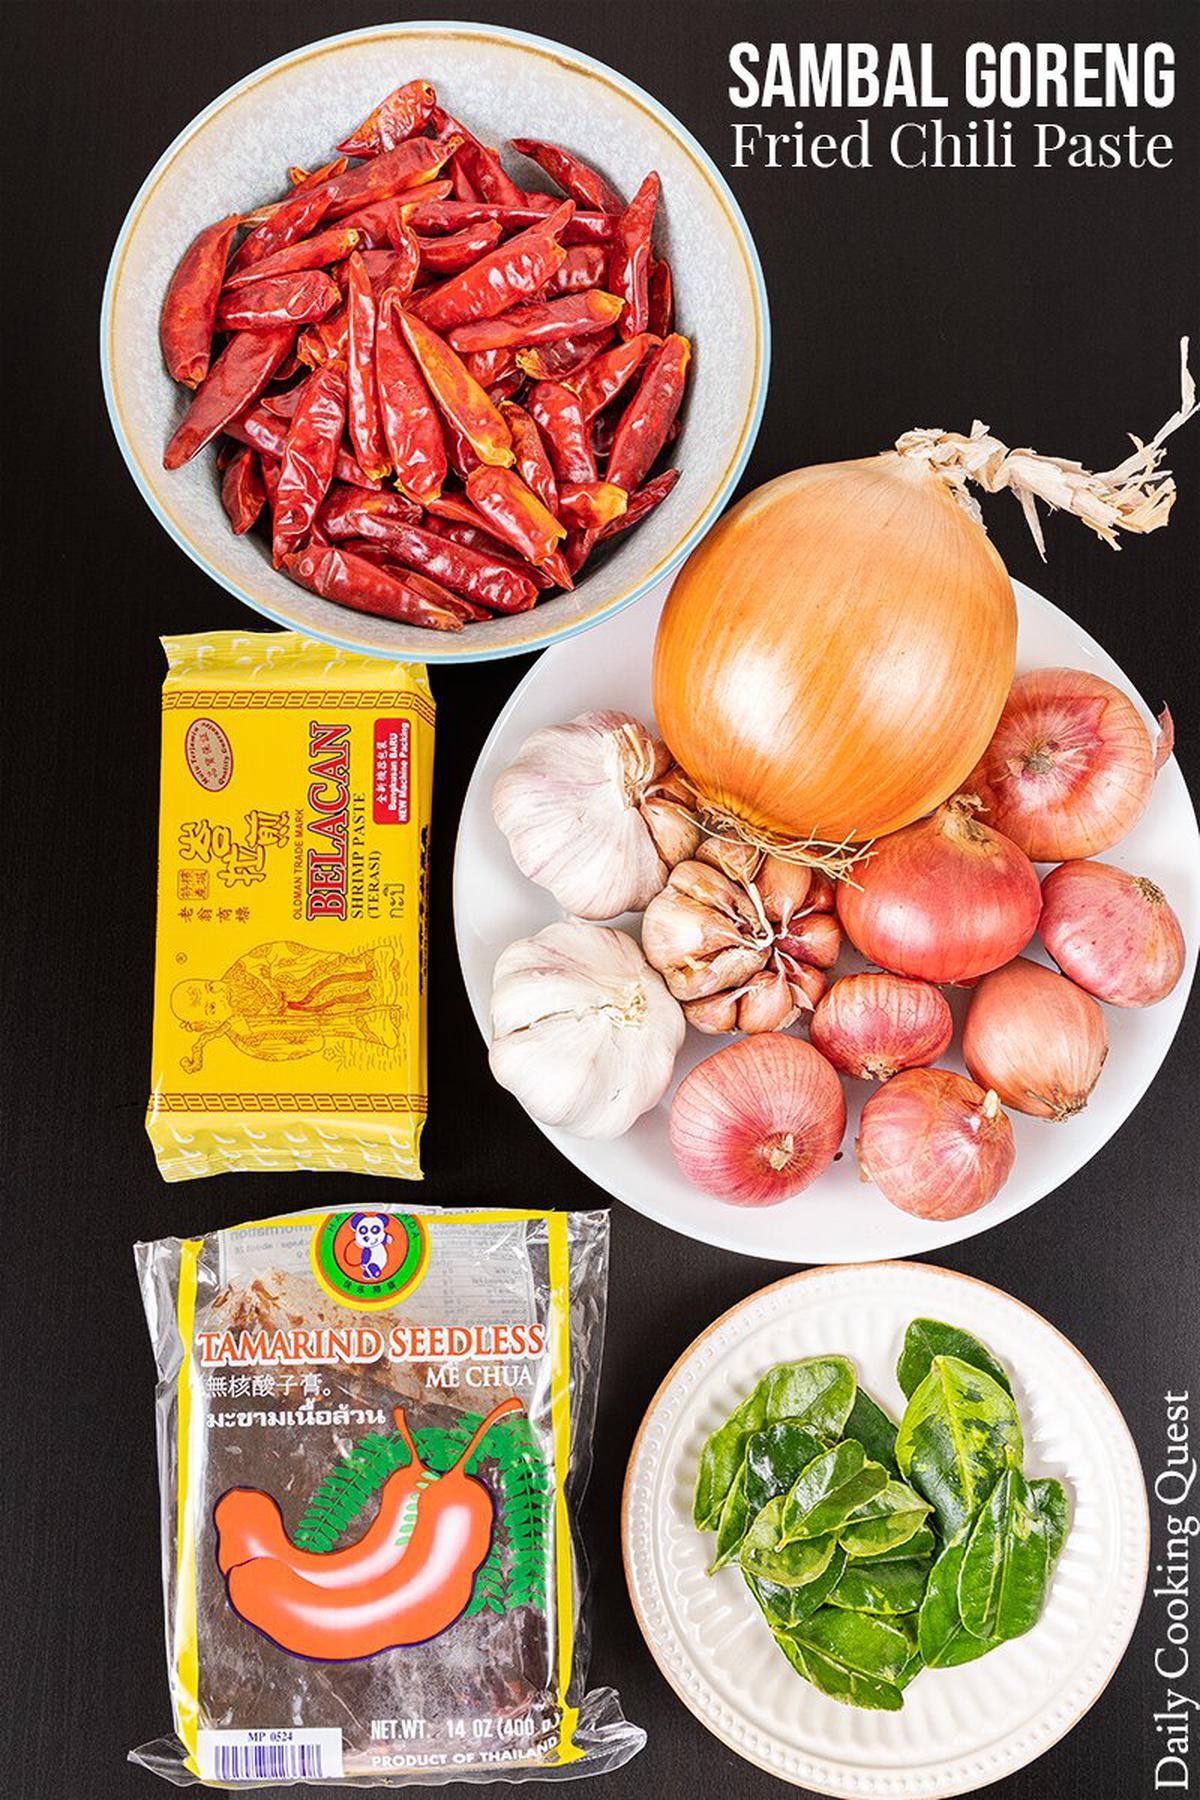 Ingredients to prepare sambal goreng(fried chili paste): dried red chilies, shallots, garlic, onion, terasi/belacan/shrimp paste, kaffir lime leave, and tamarind.